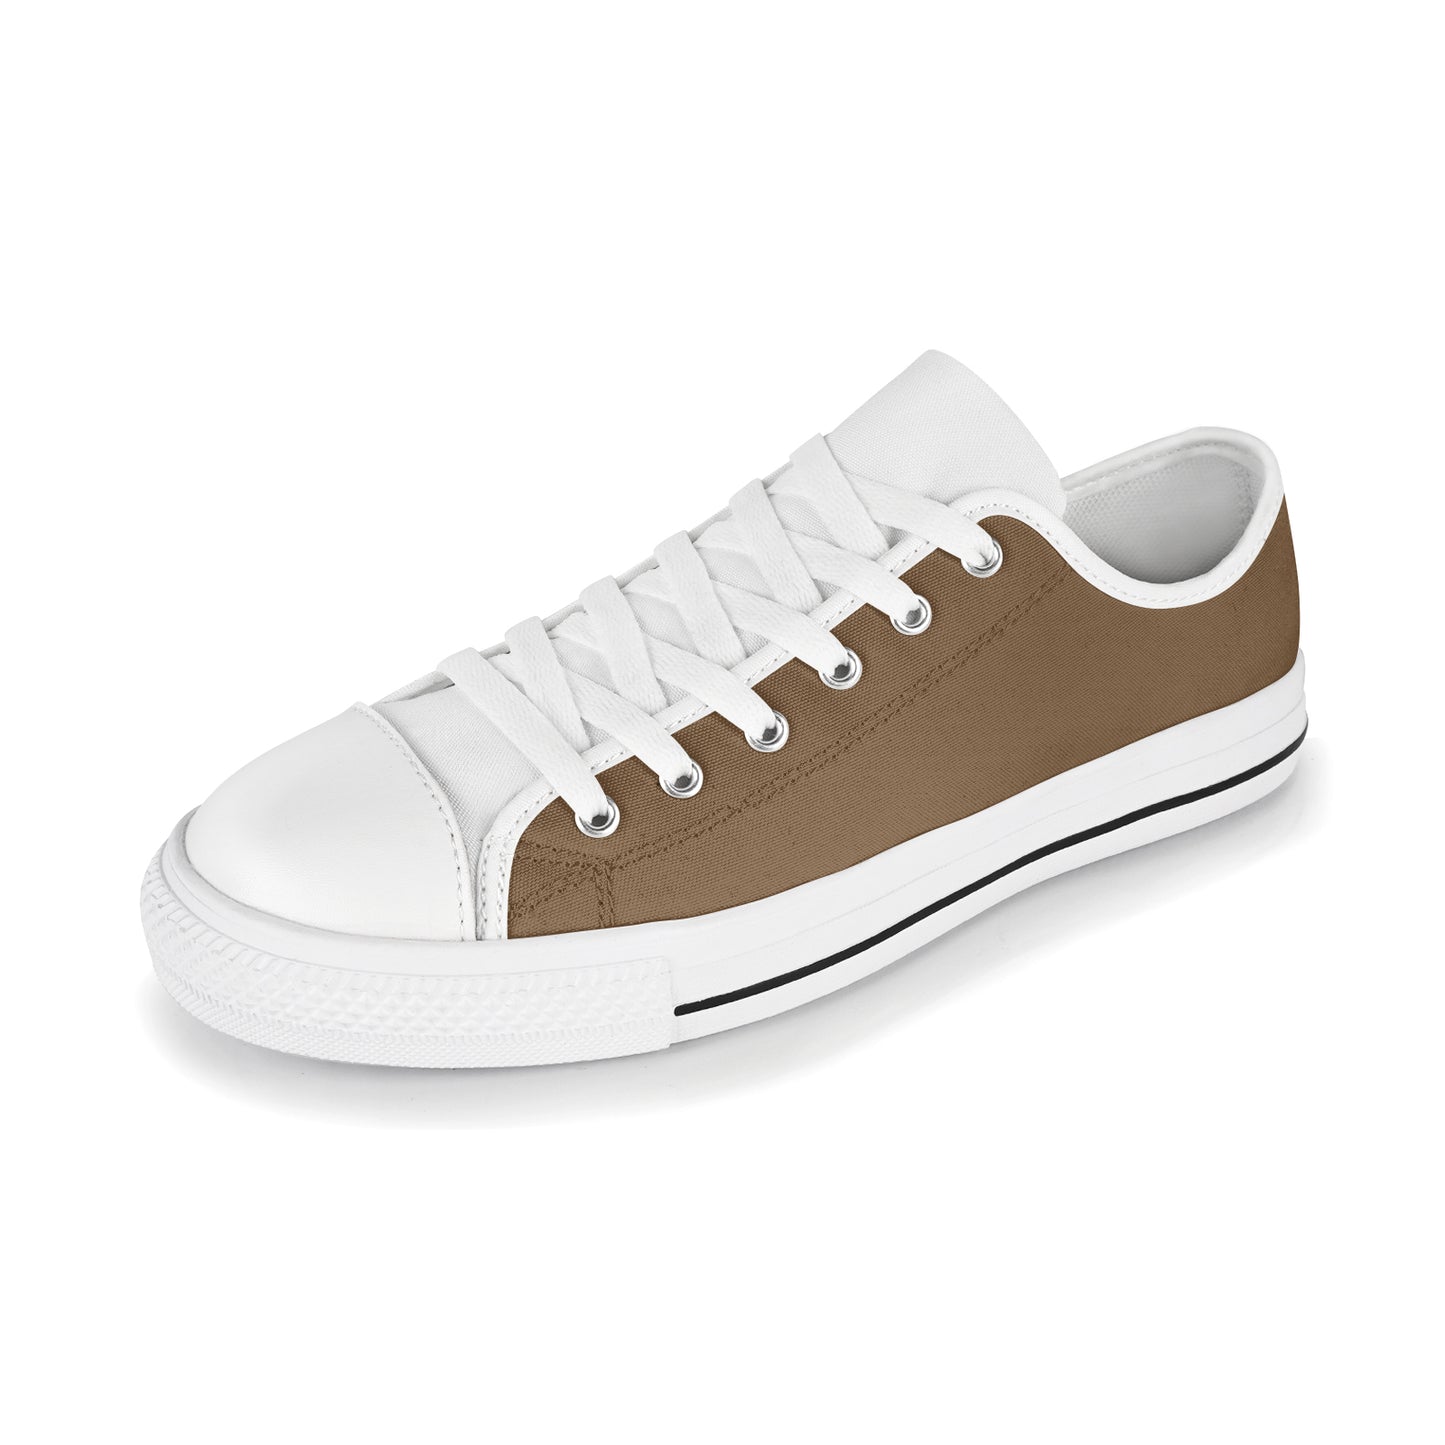 Men's Canvas Sneakers - Classic Brown